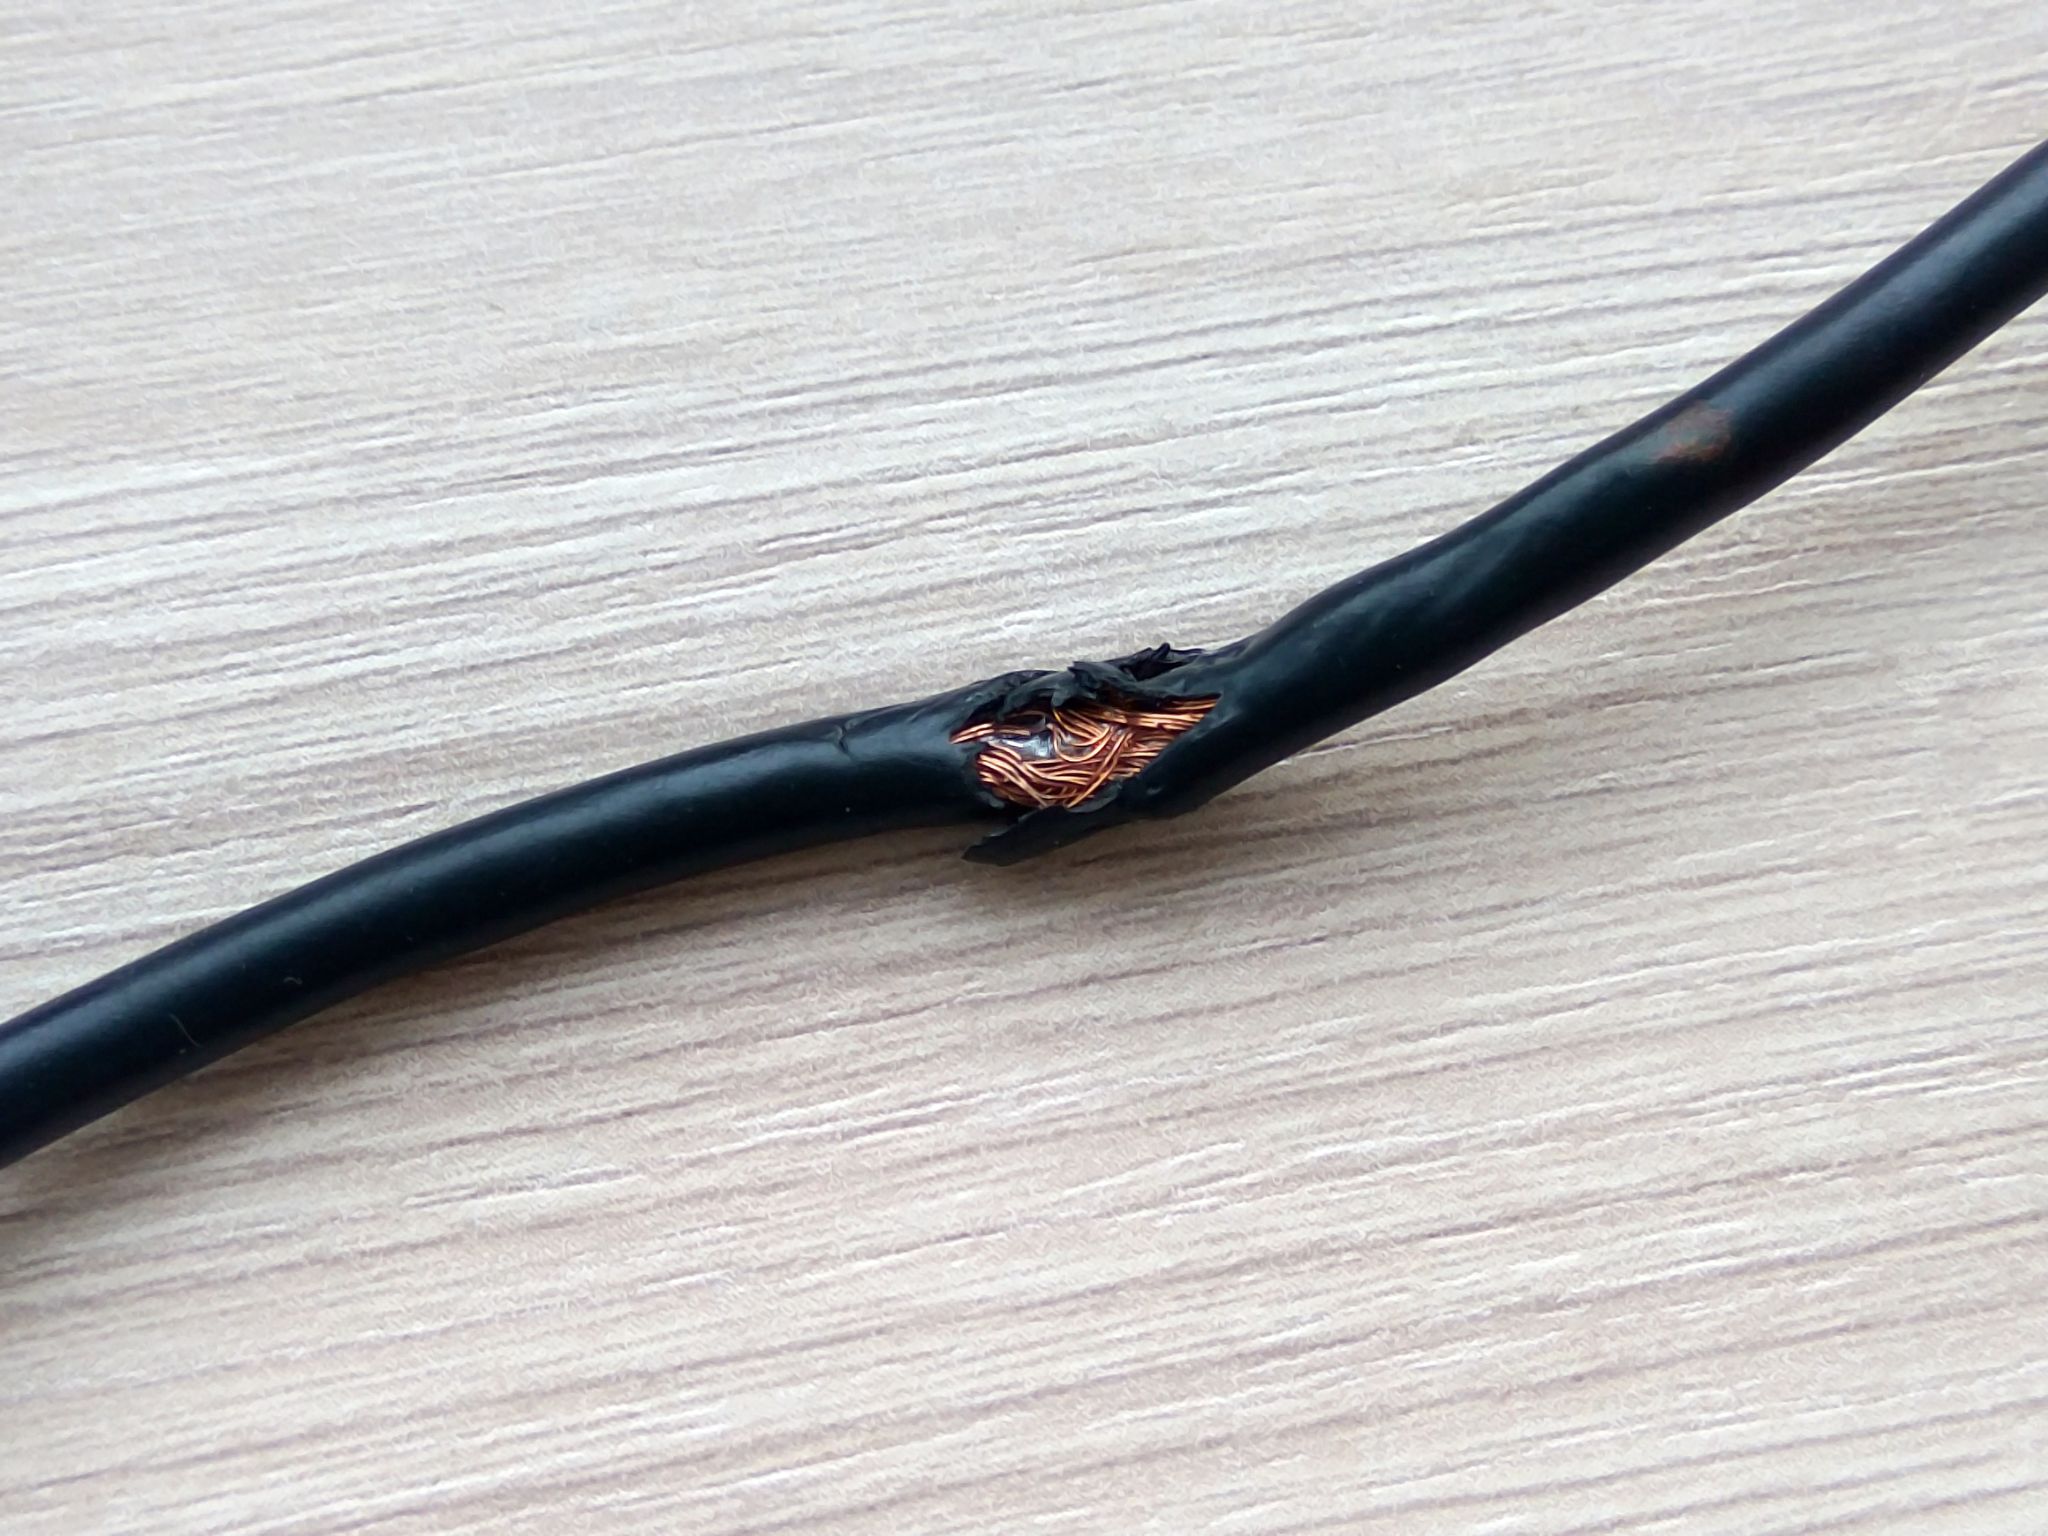 a damaged power cord